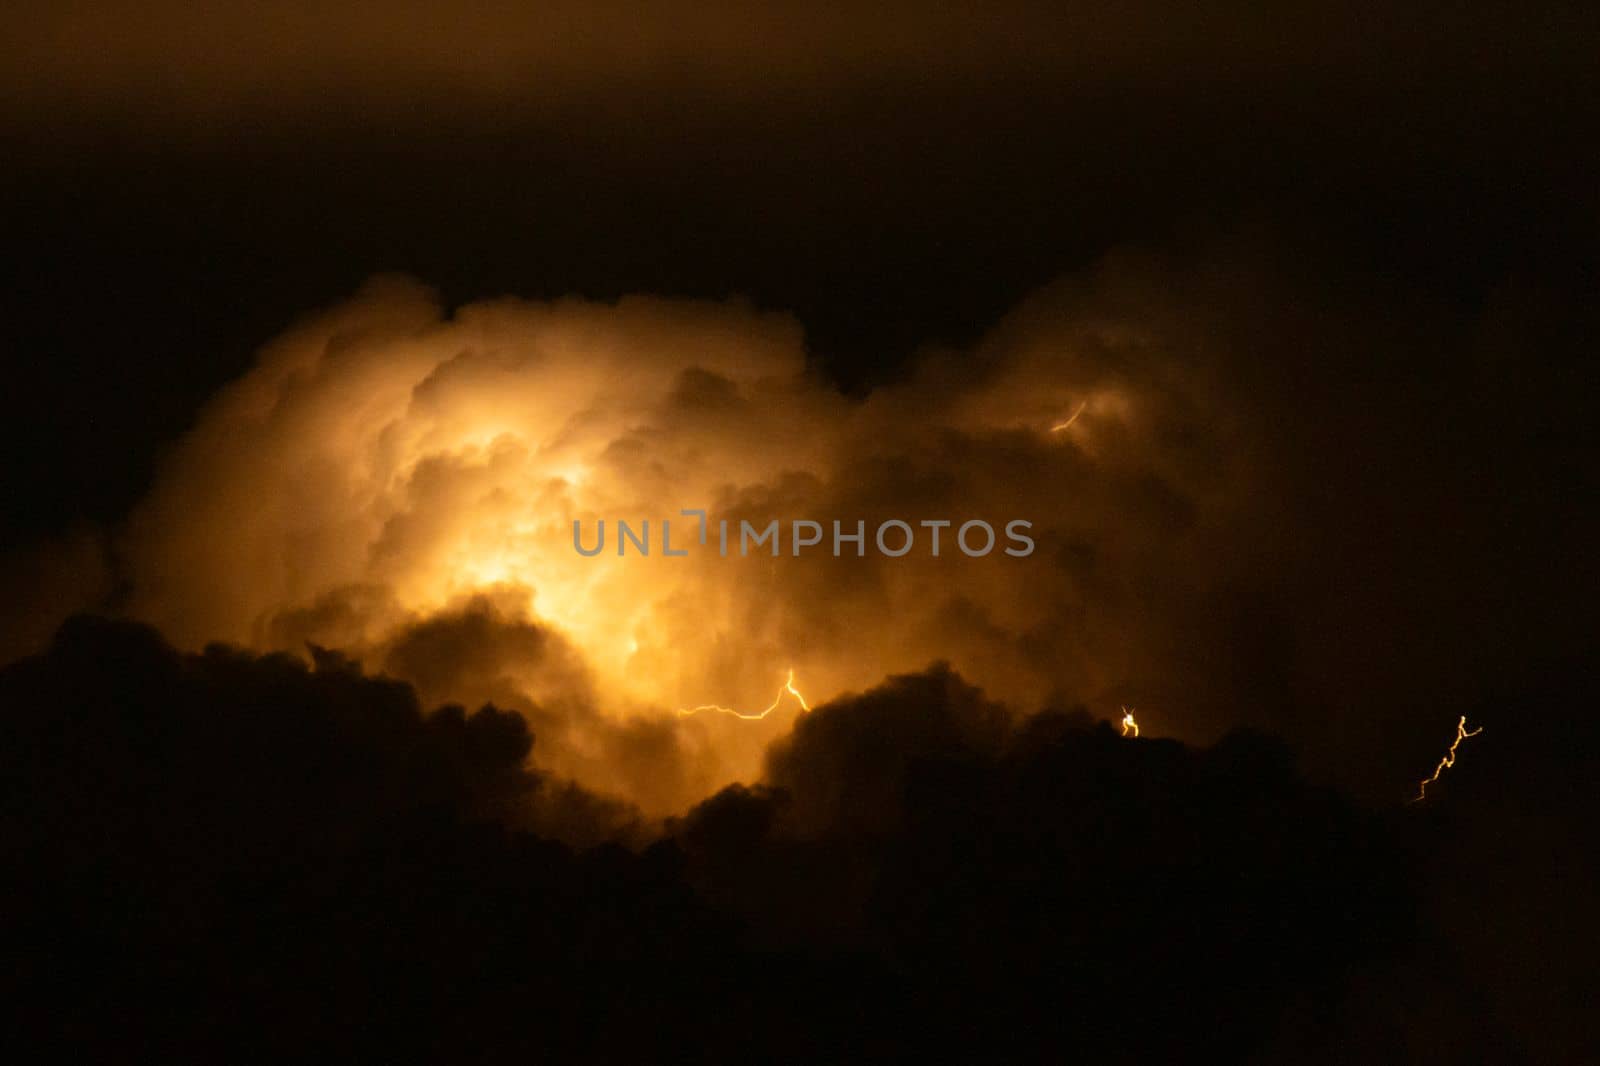 Thunderstruck: Dramatic Lightning Strike in Dark Clouds by StefanMal